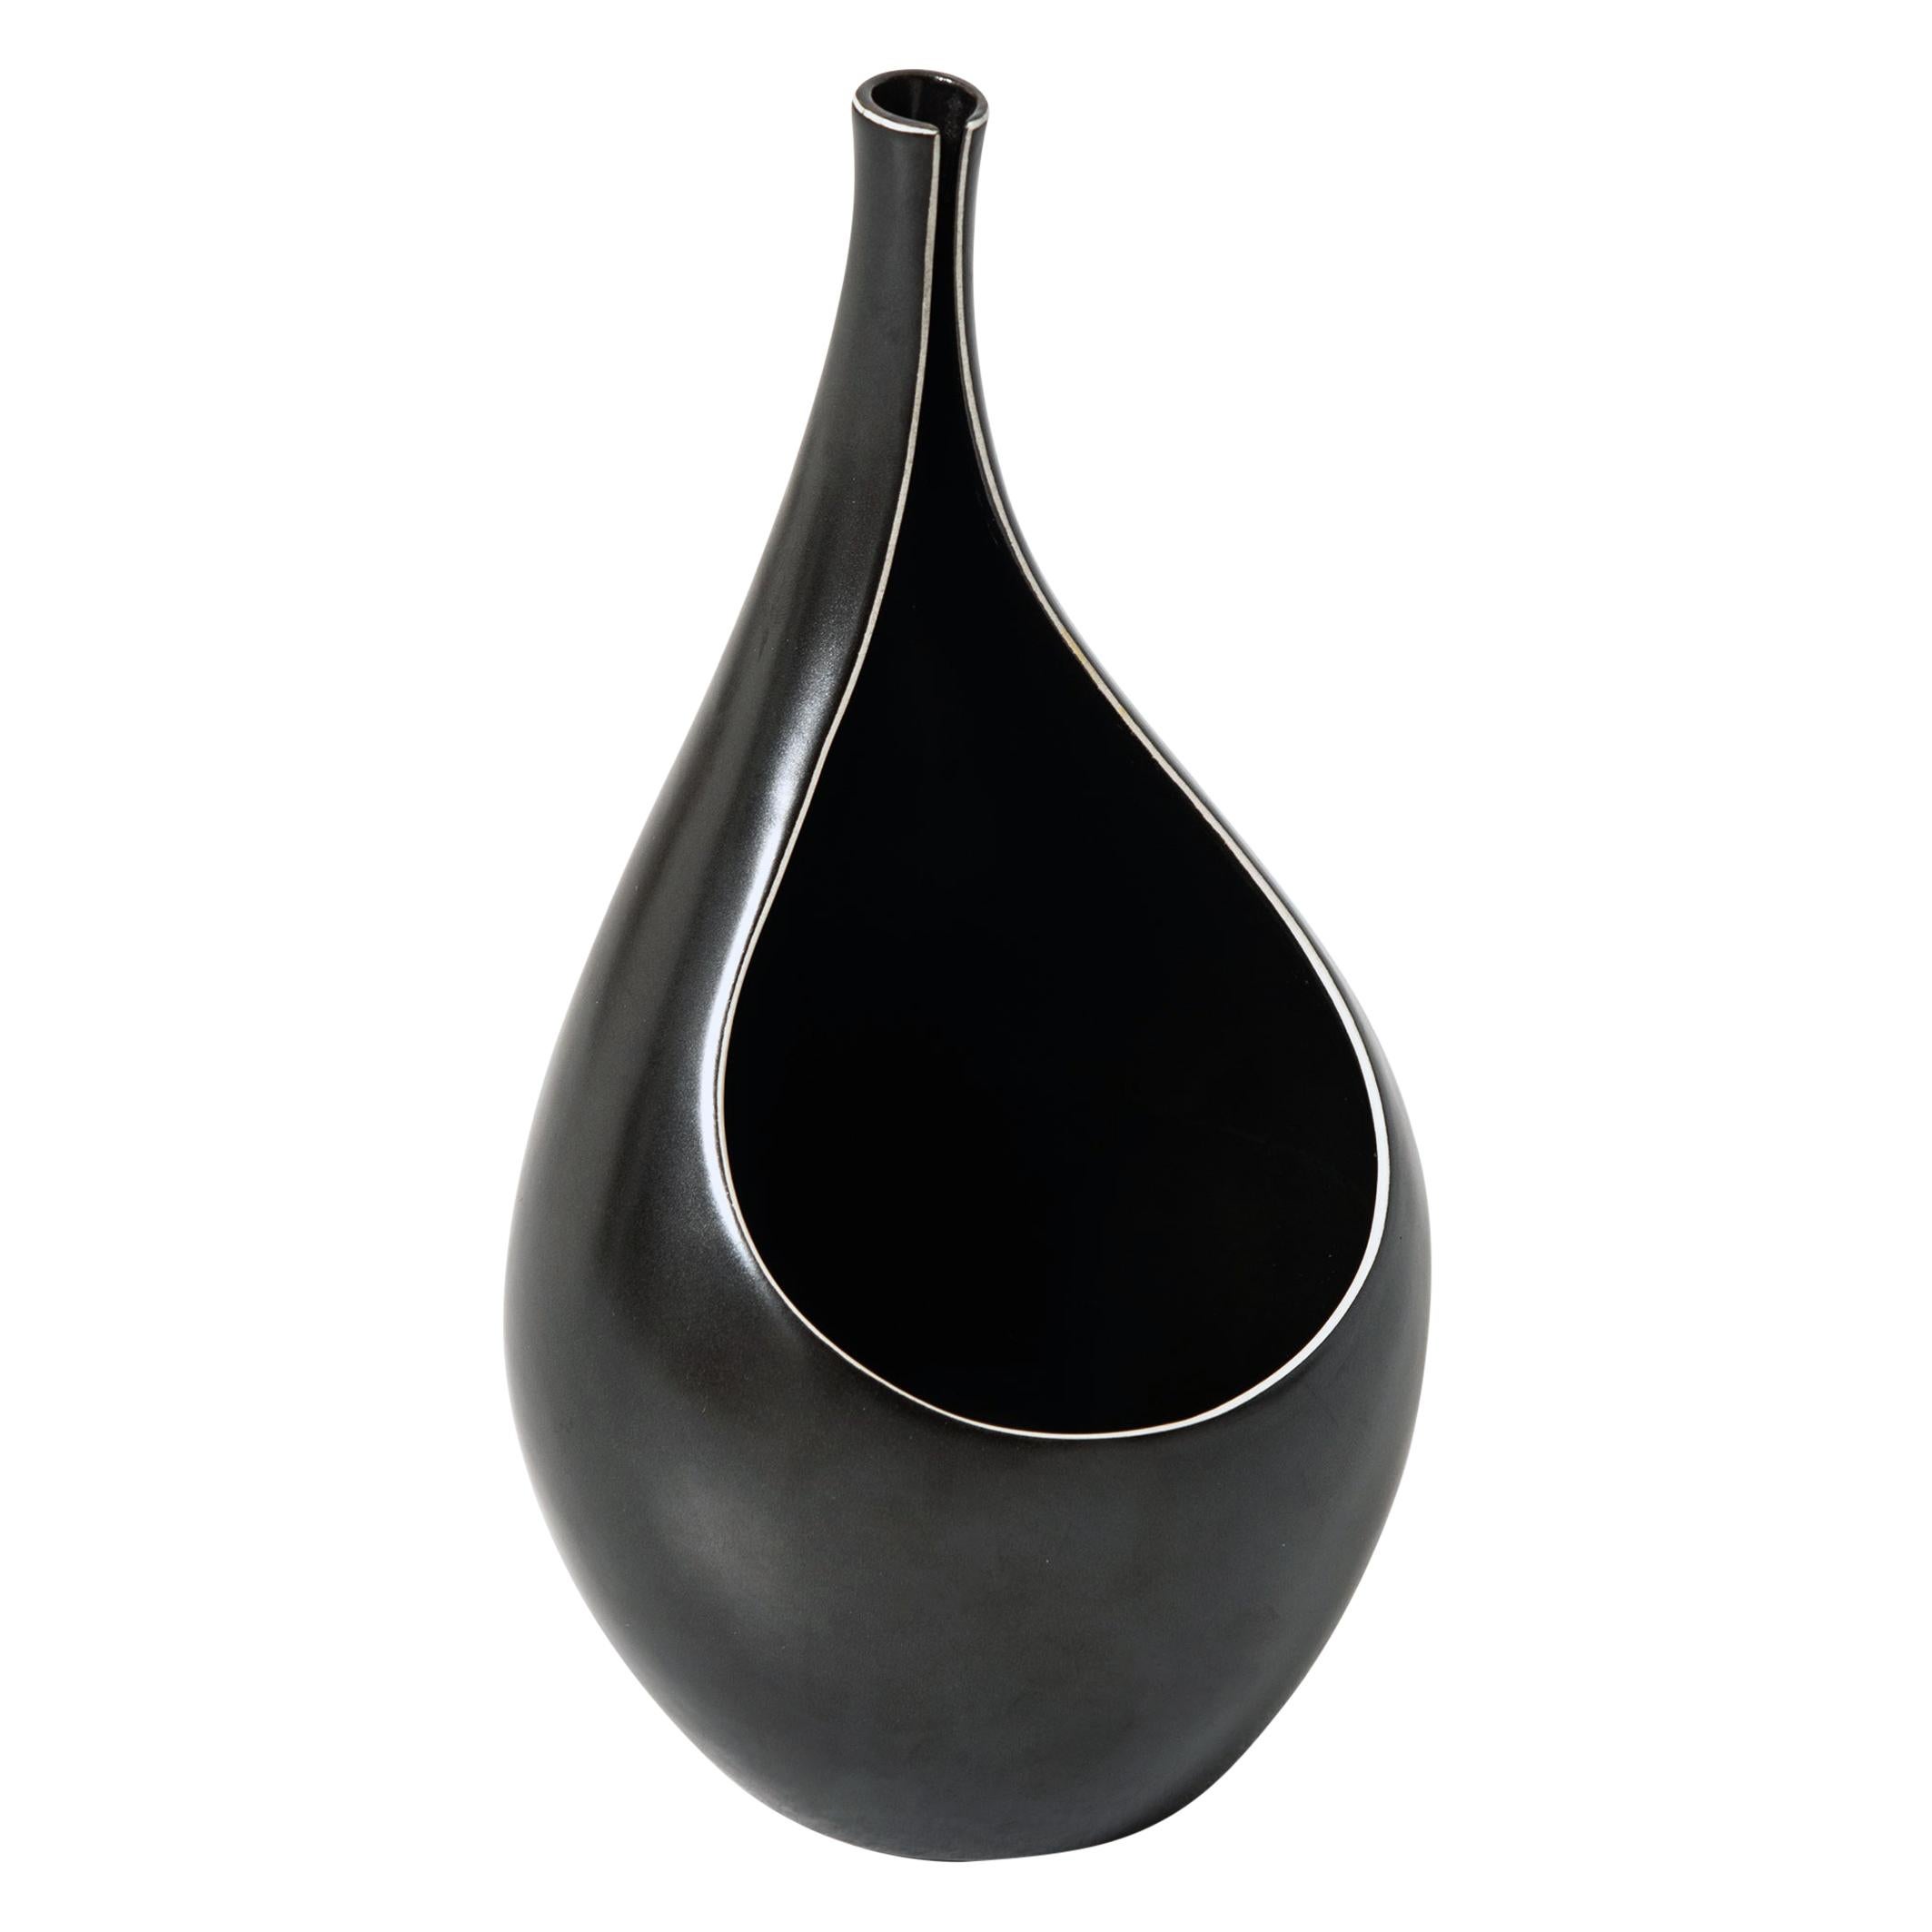 Stig Lindberg ceramic vase model Pungo by Gustavsberg in Sweden